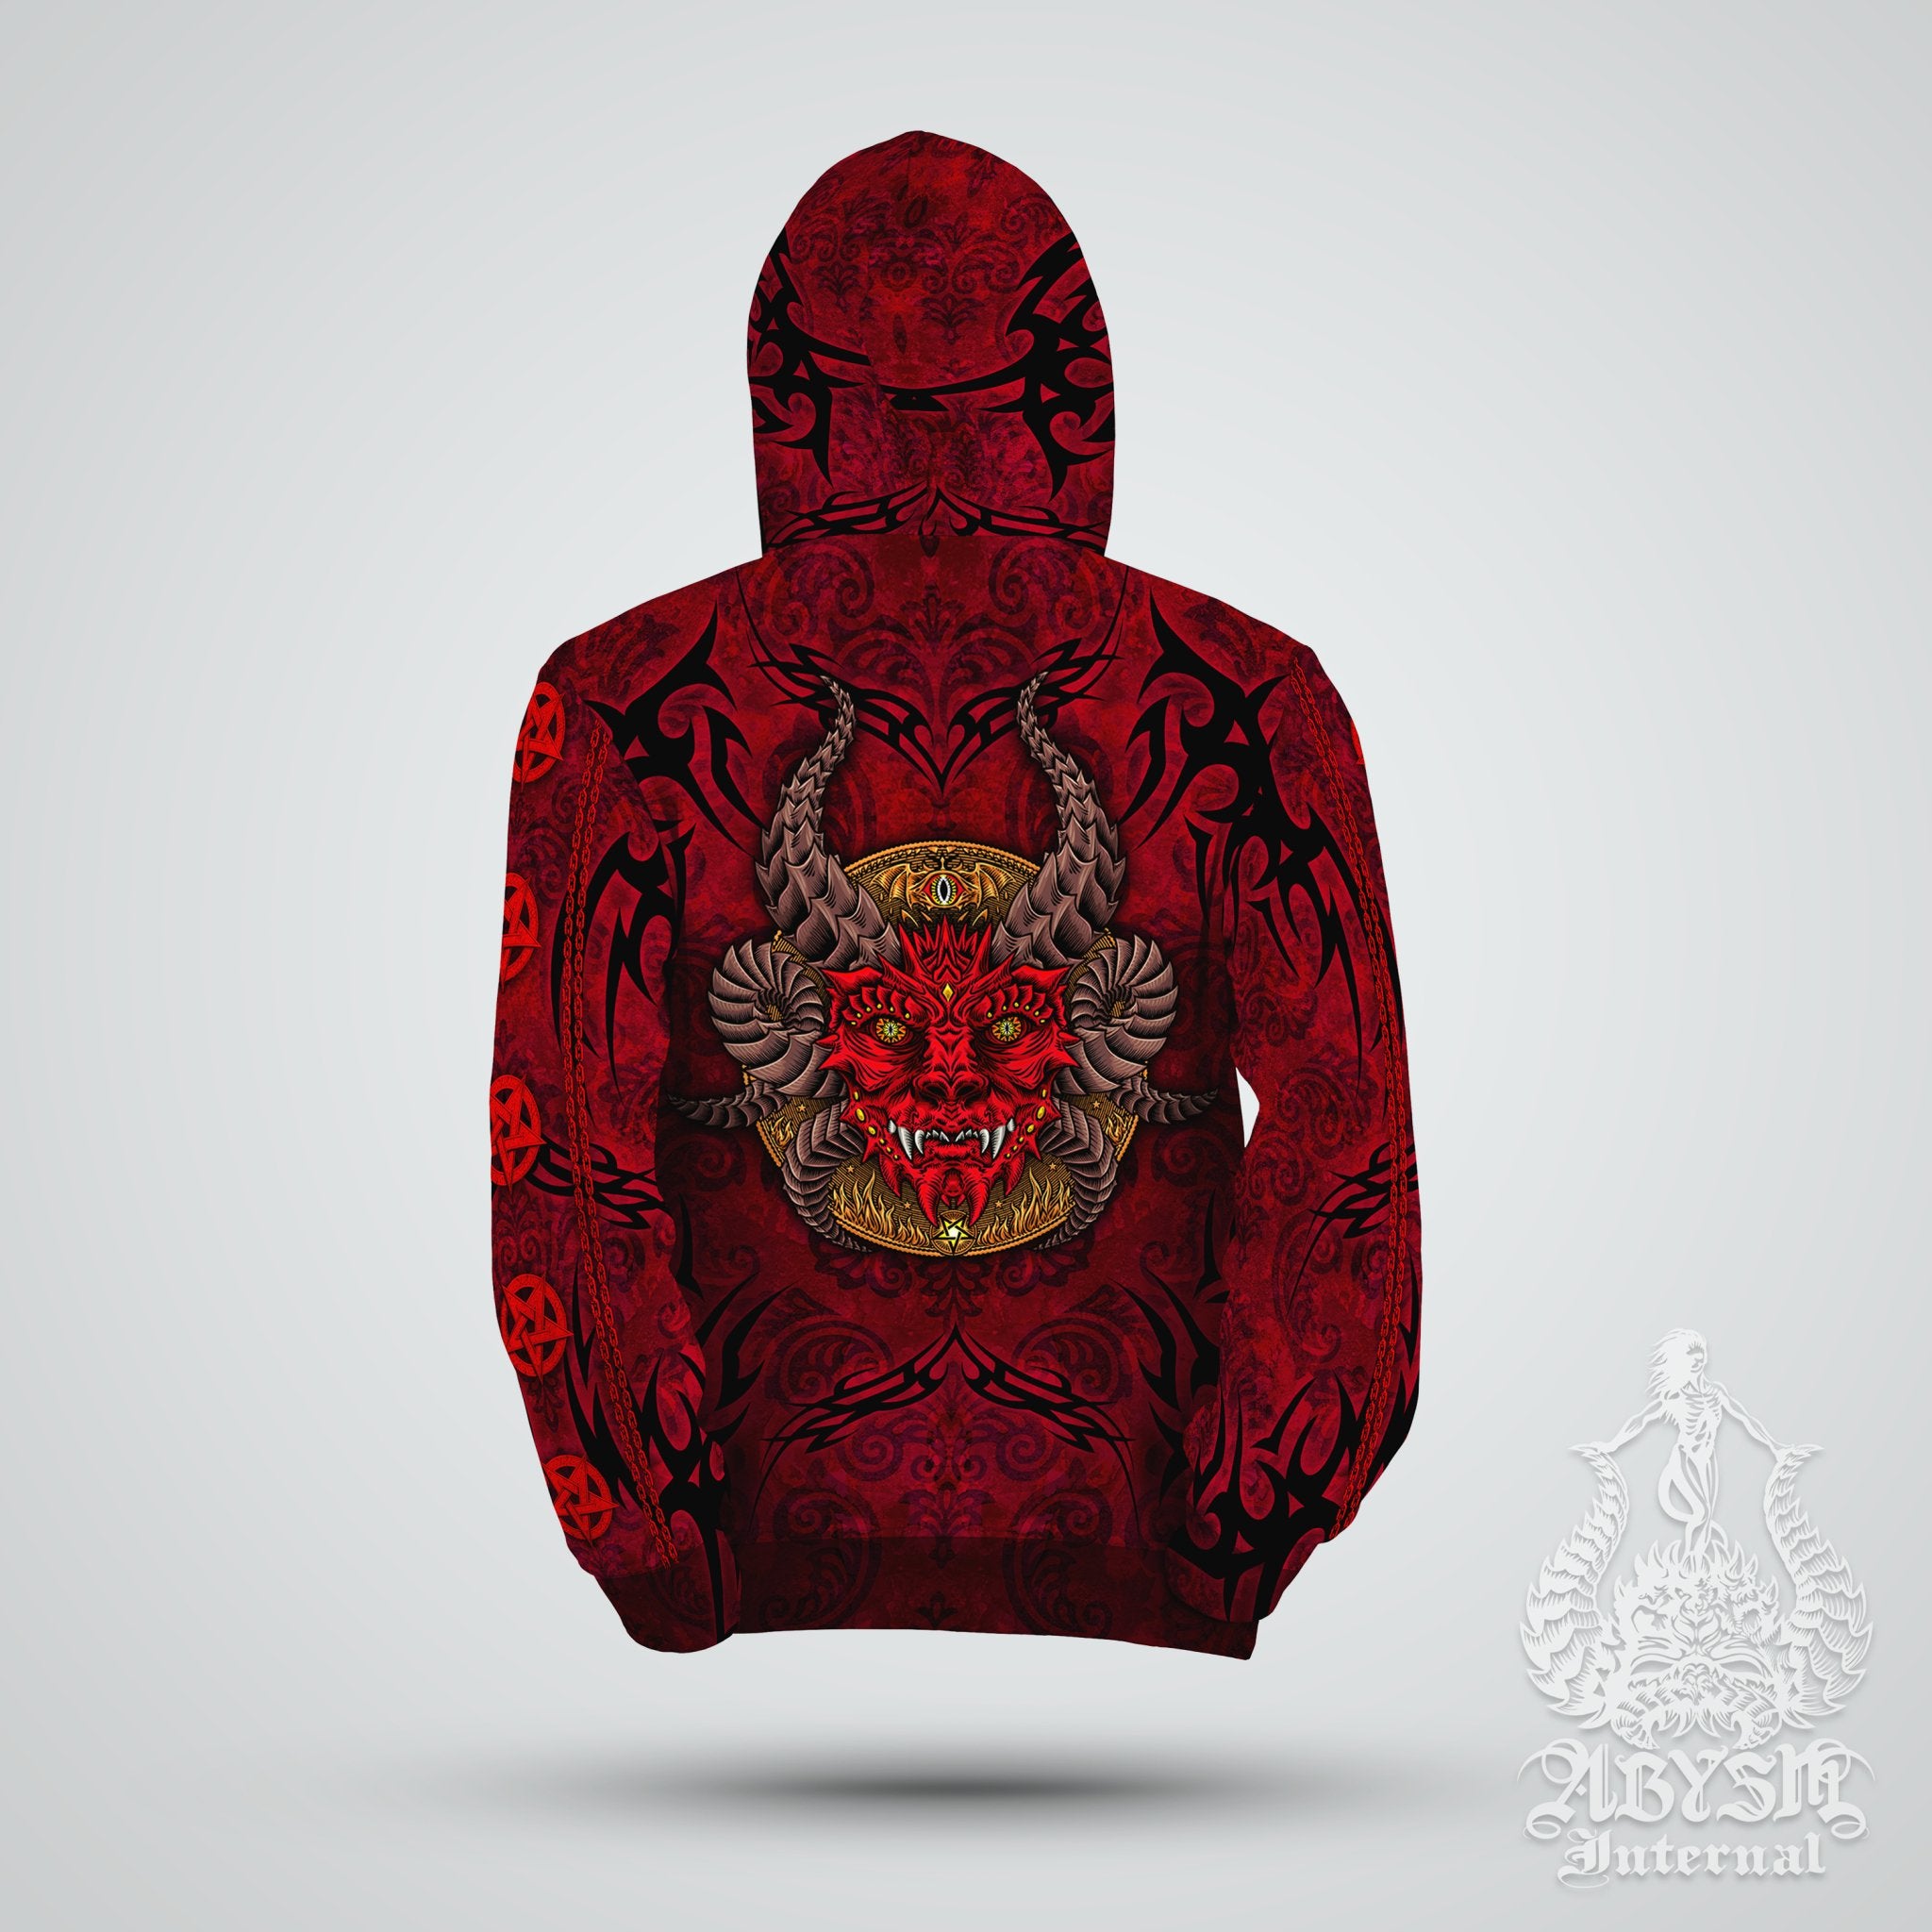 Devil Hoodie, Satanic Streetwear, Gothic Pentagram Outfit, Black Metal Concert Sweater, Alternative Clothing, Unisex - Lucifer, Black or Red, 2 Colors - Abysm Internal